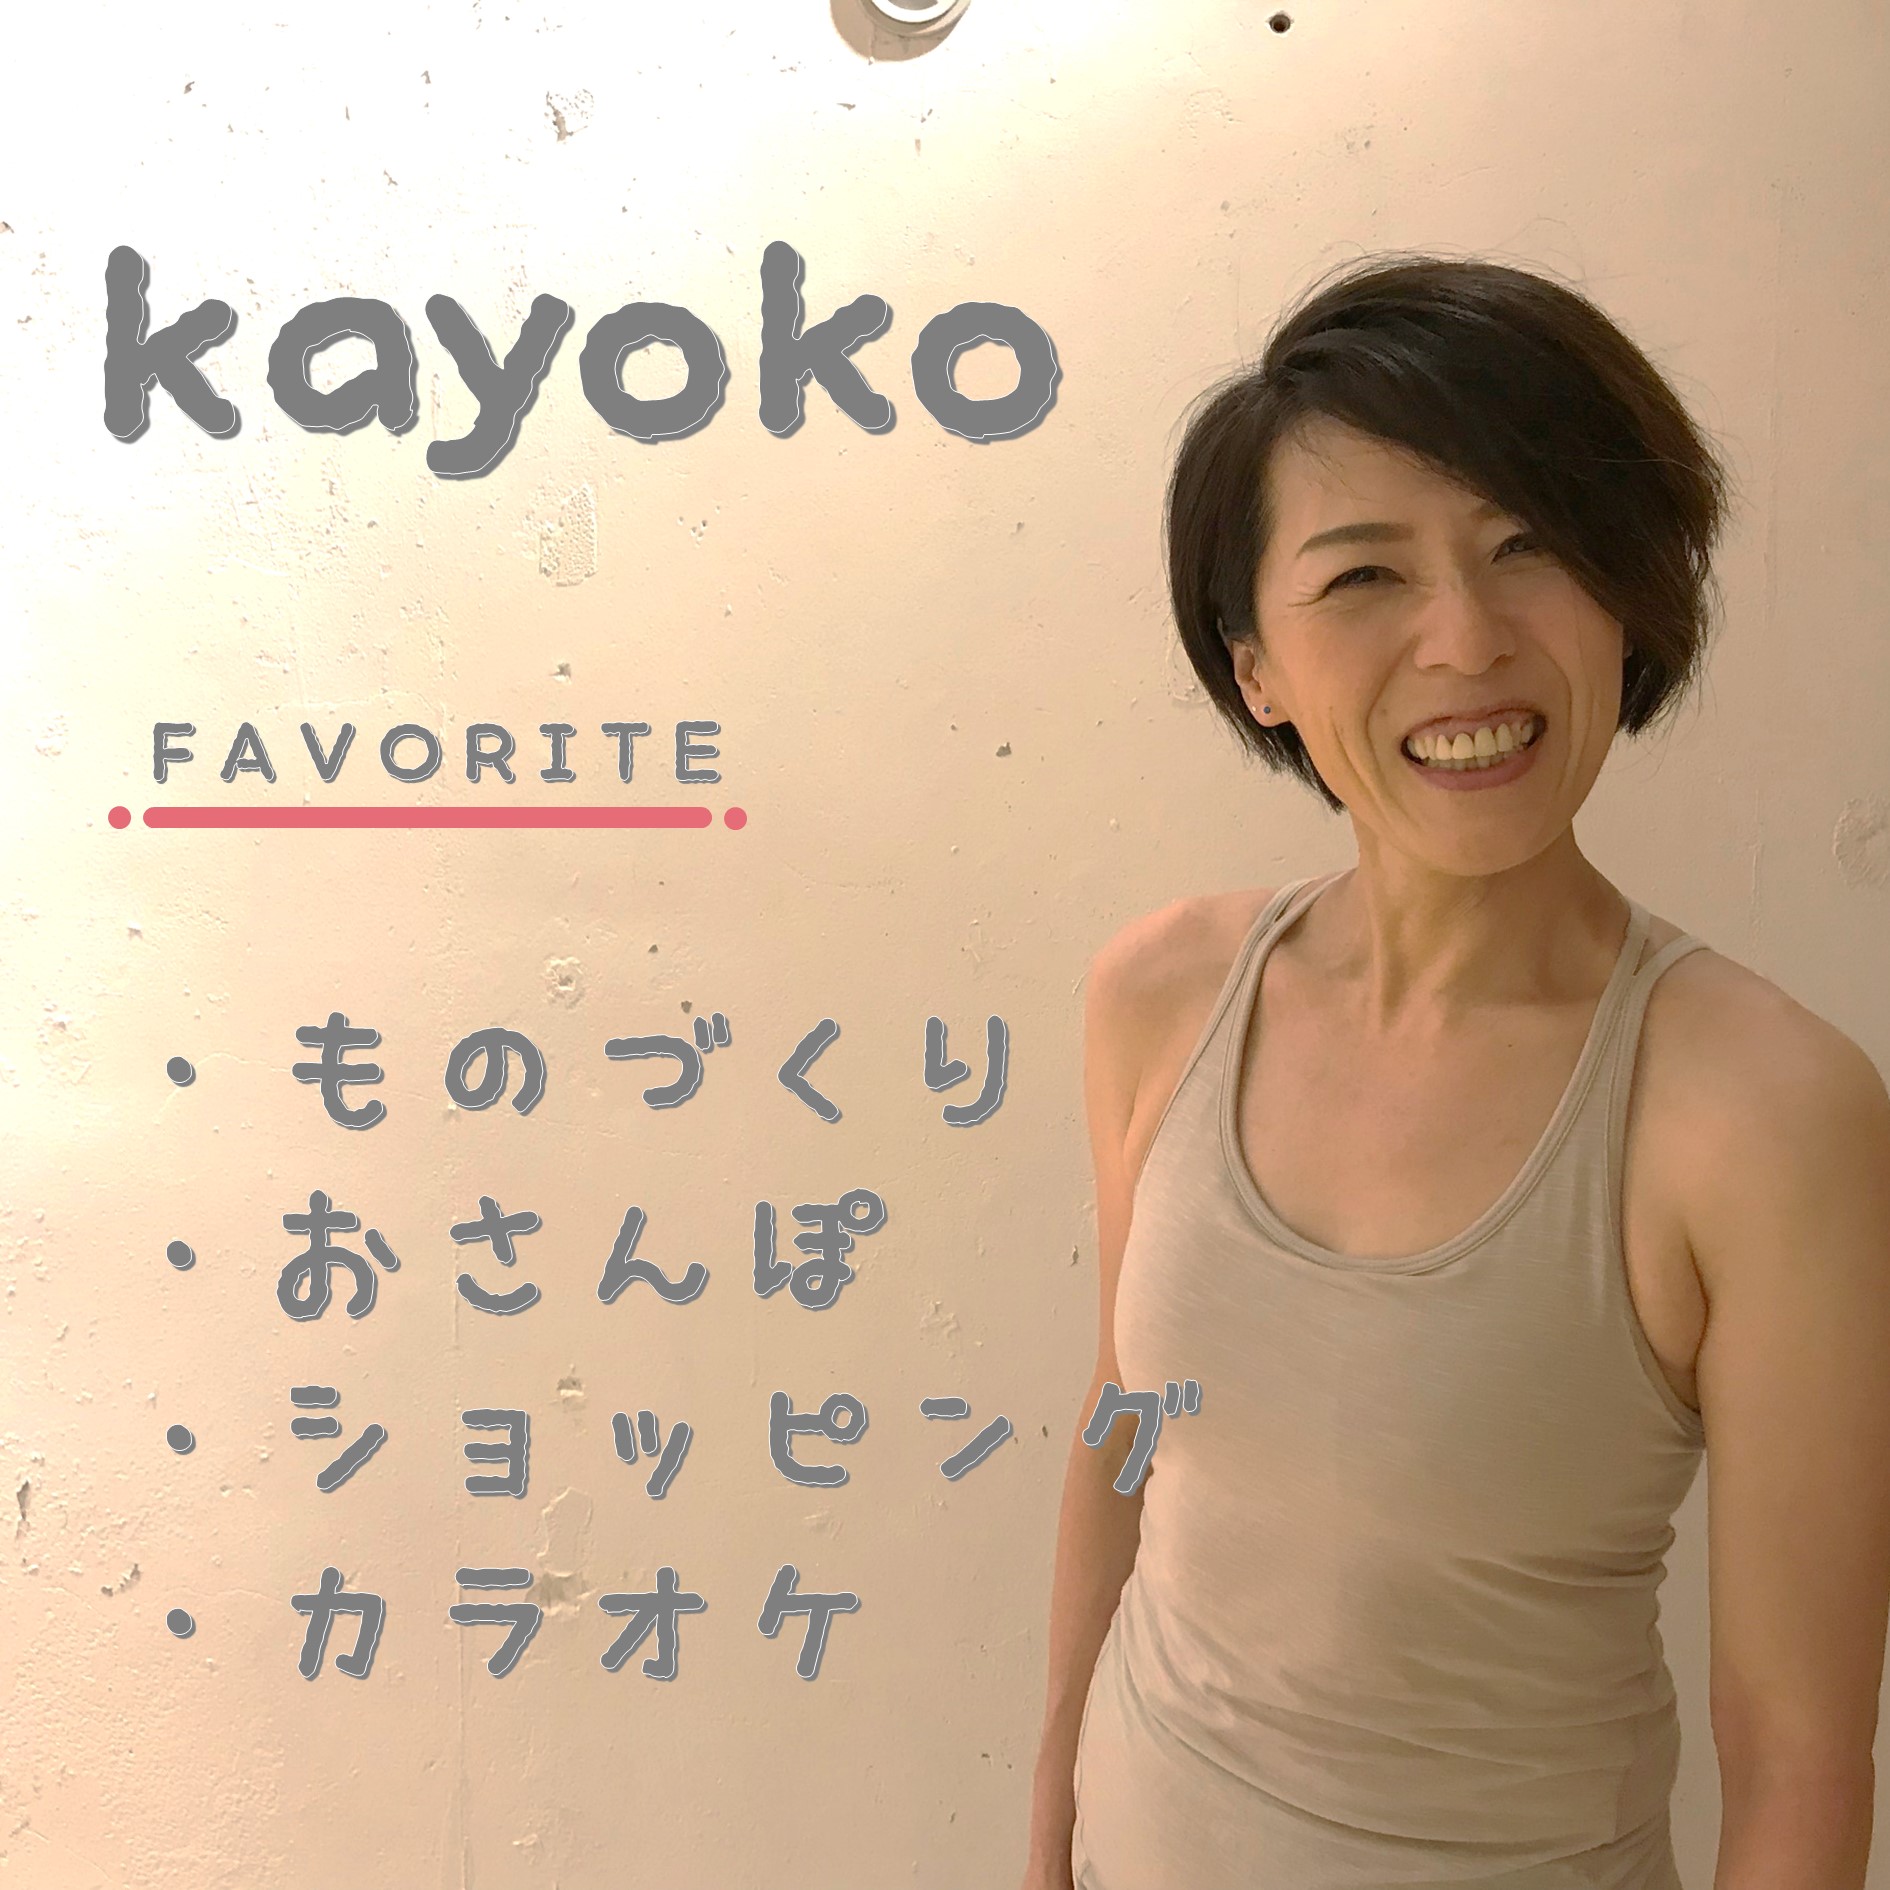 kayoko - PLAYoga magazine